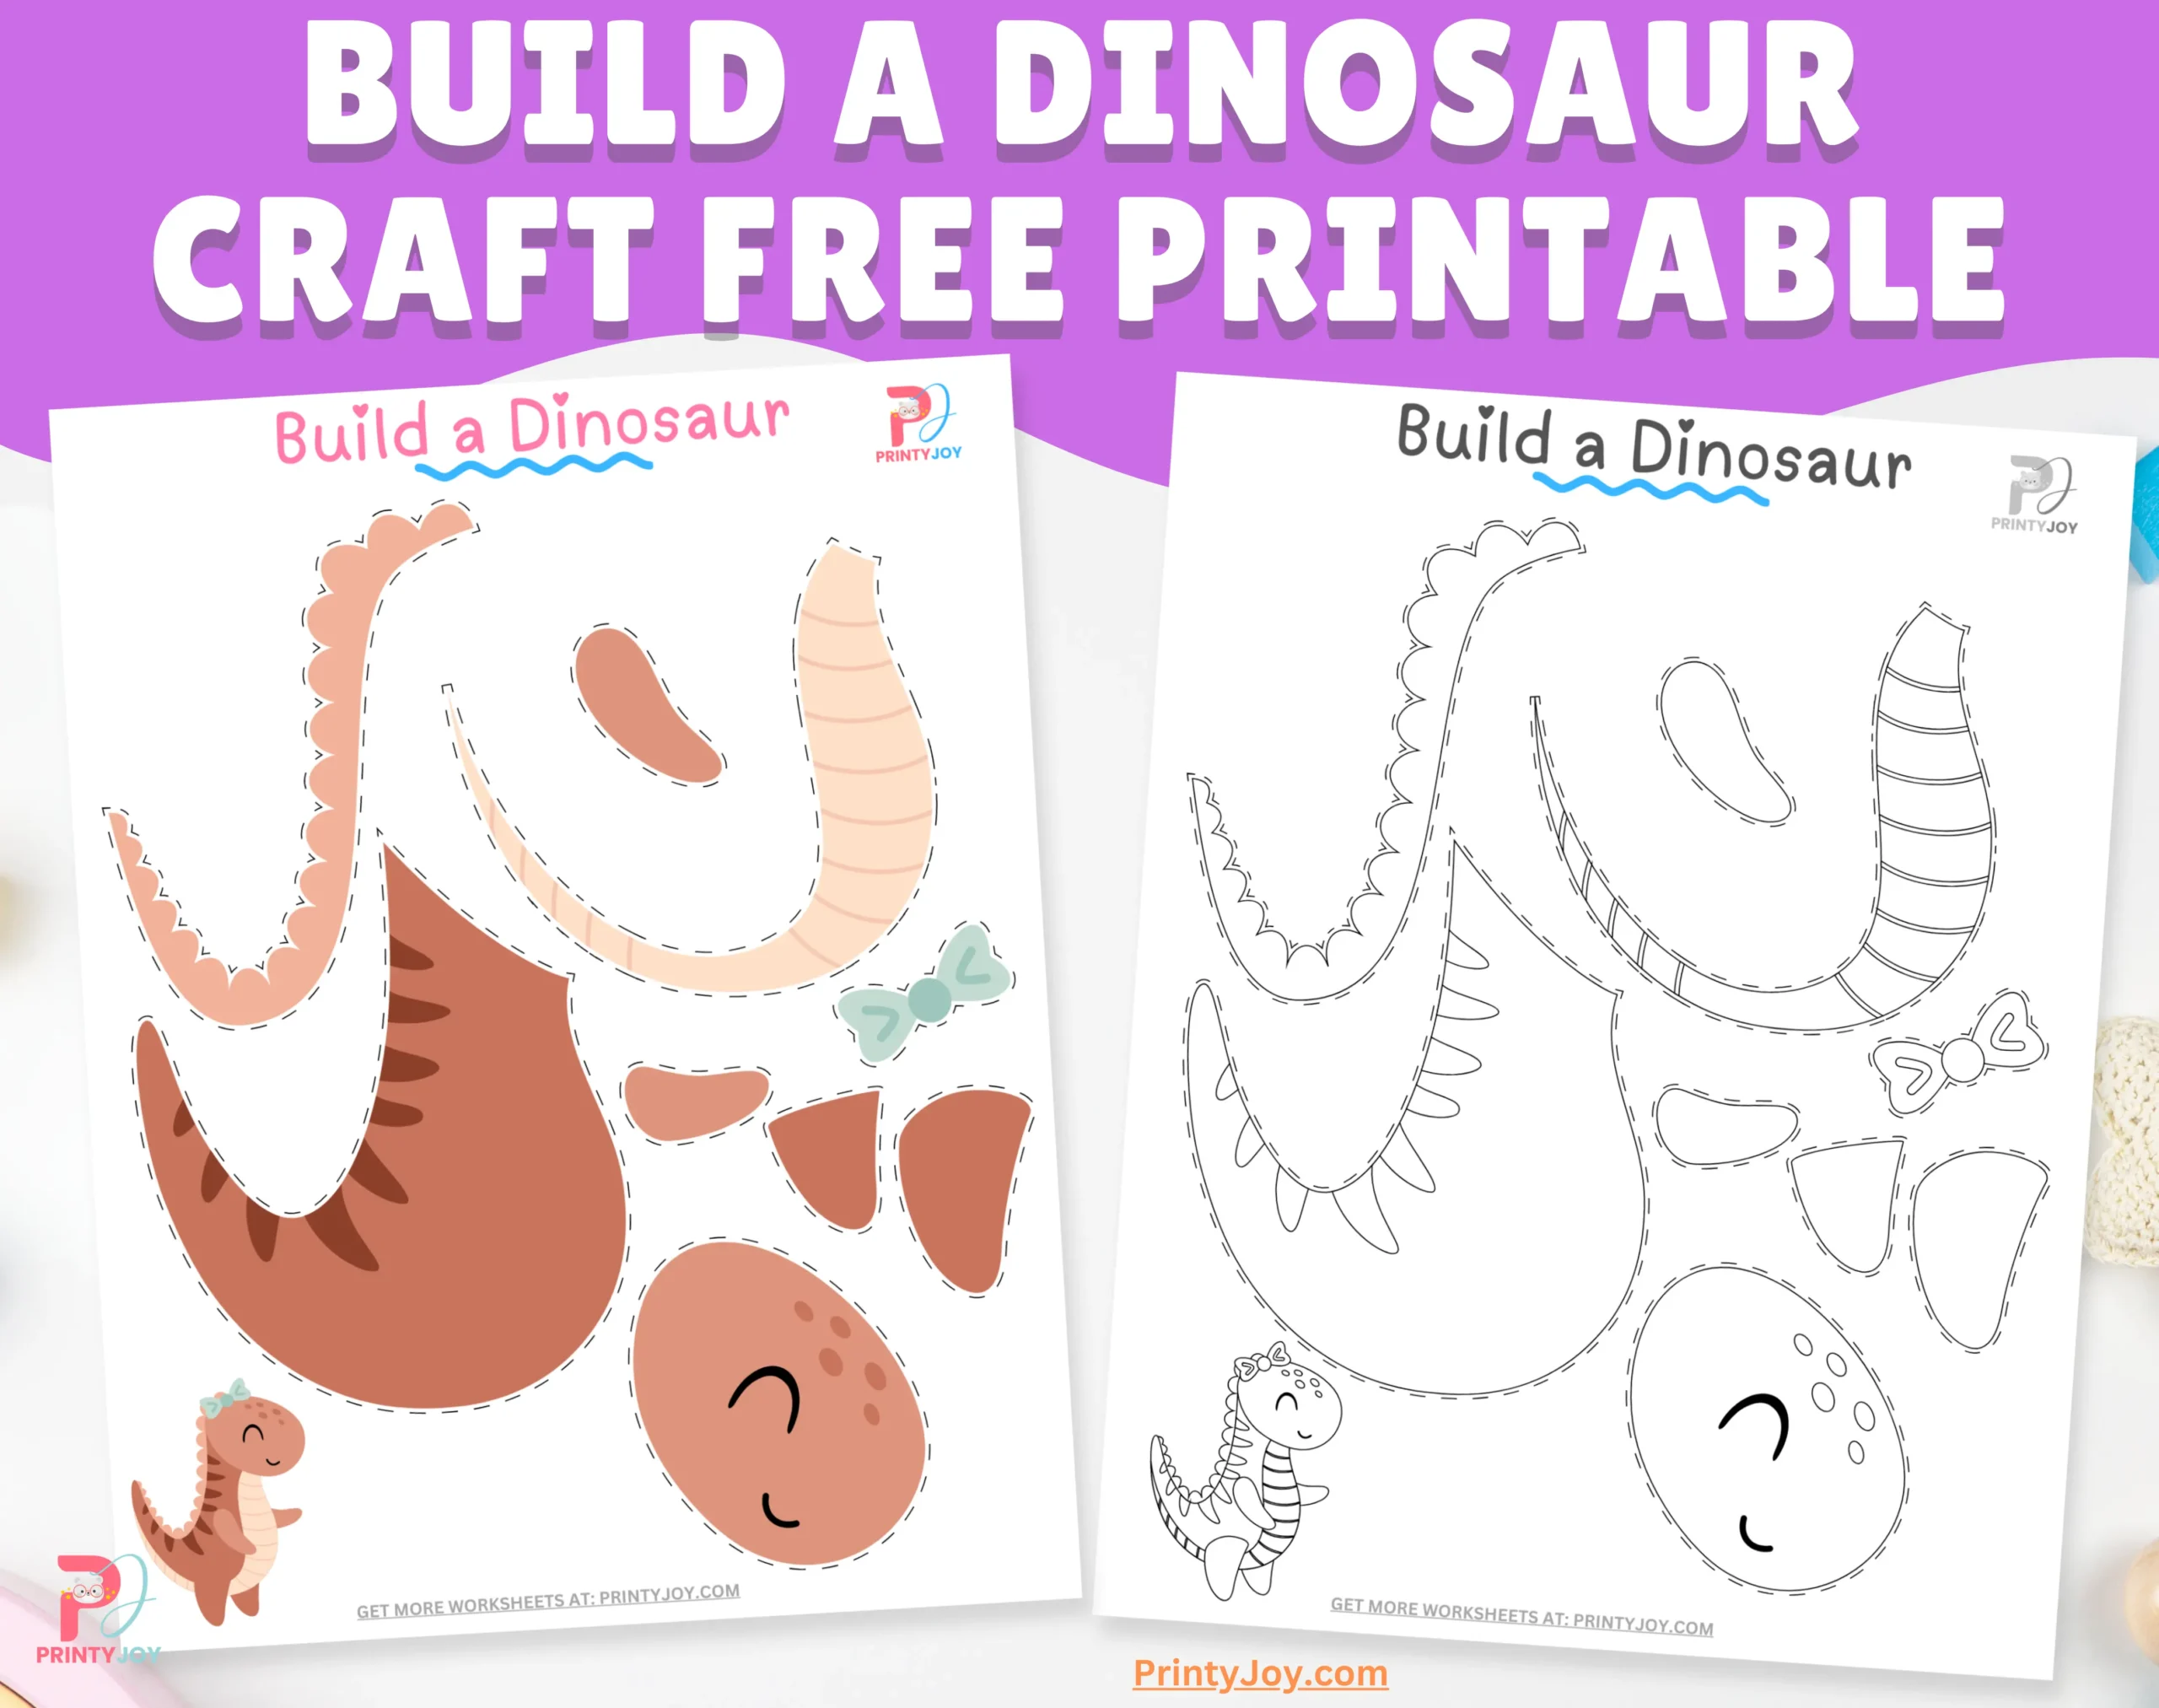 Build a Dinosaur Craft Free Printable